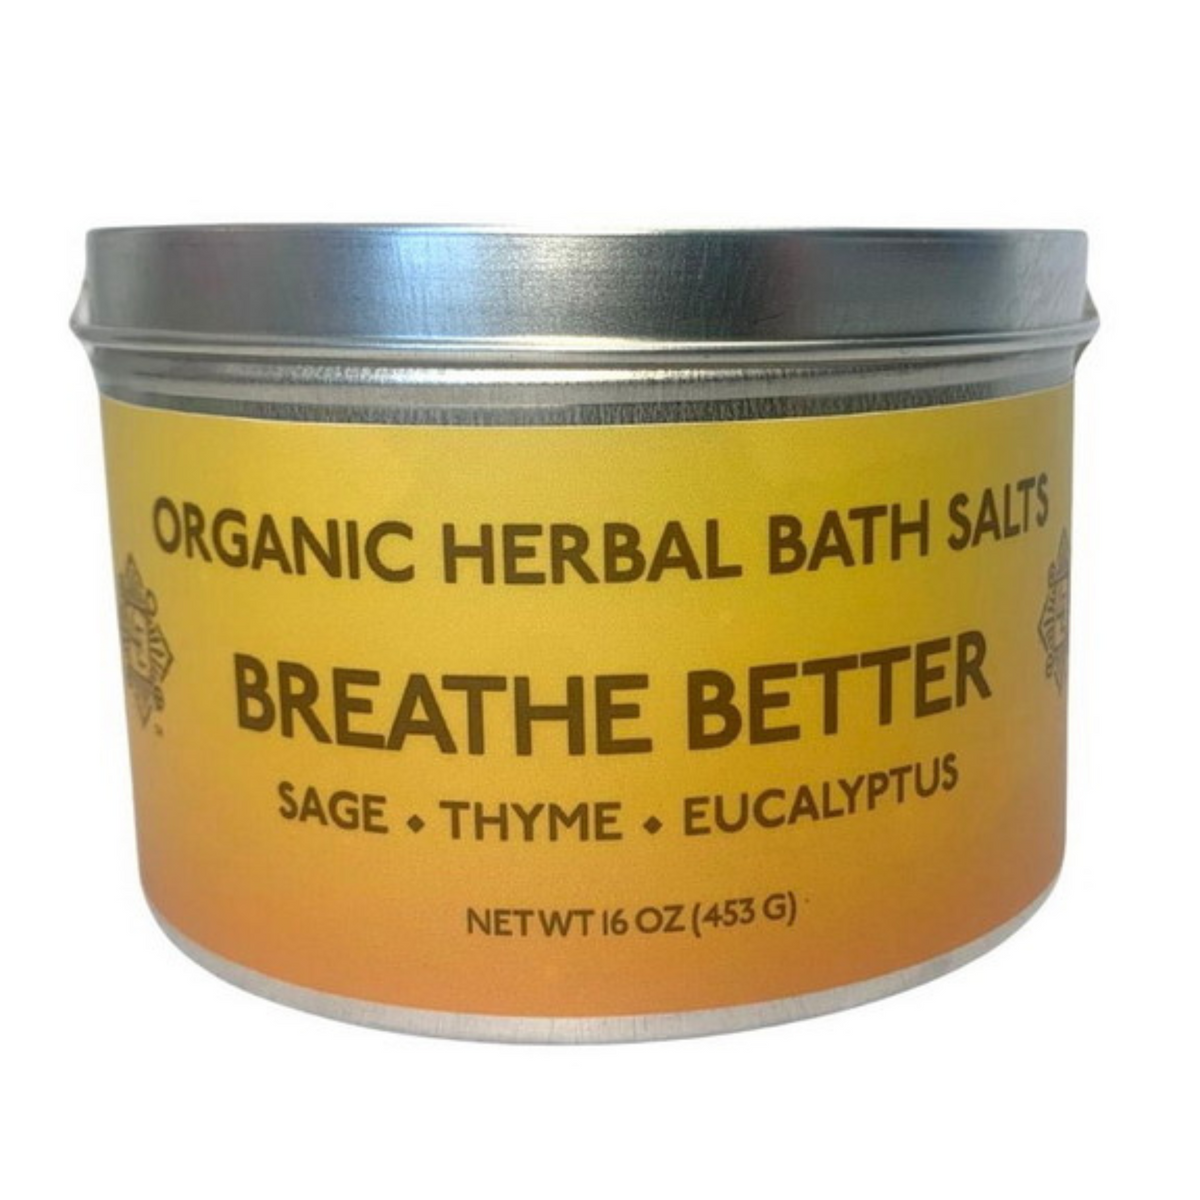 Primary Image of Four Elements Breathe Better Bath Salts (16 oz)